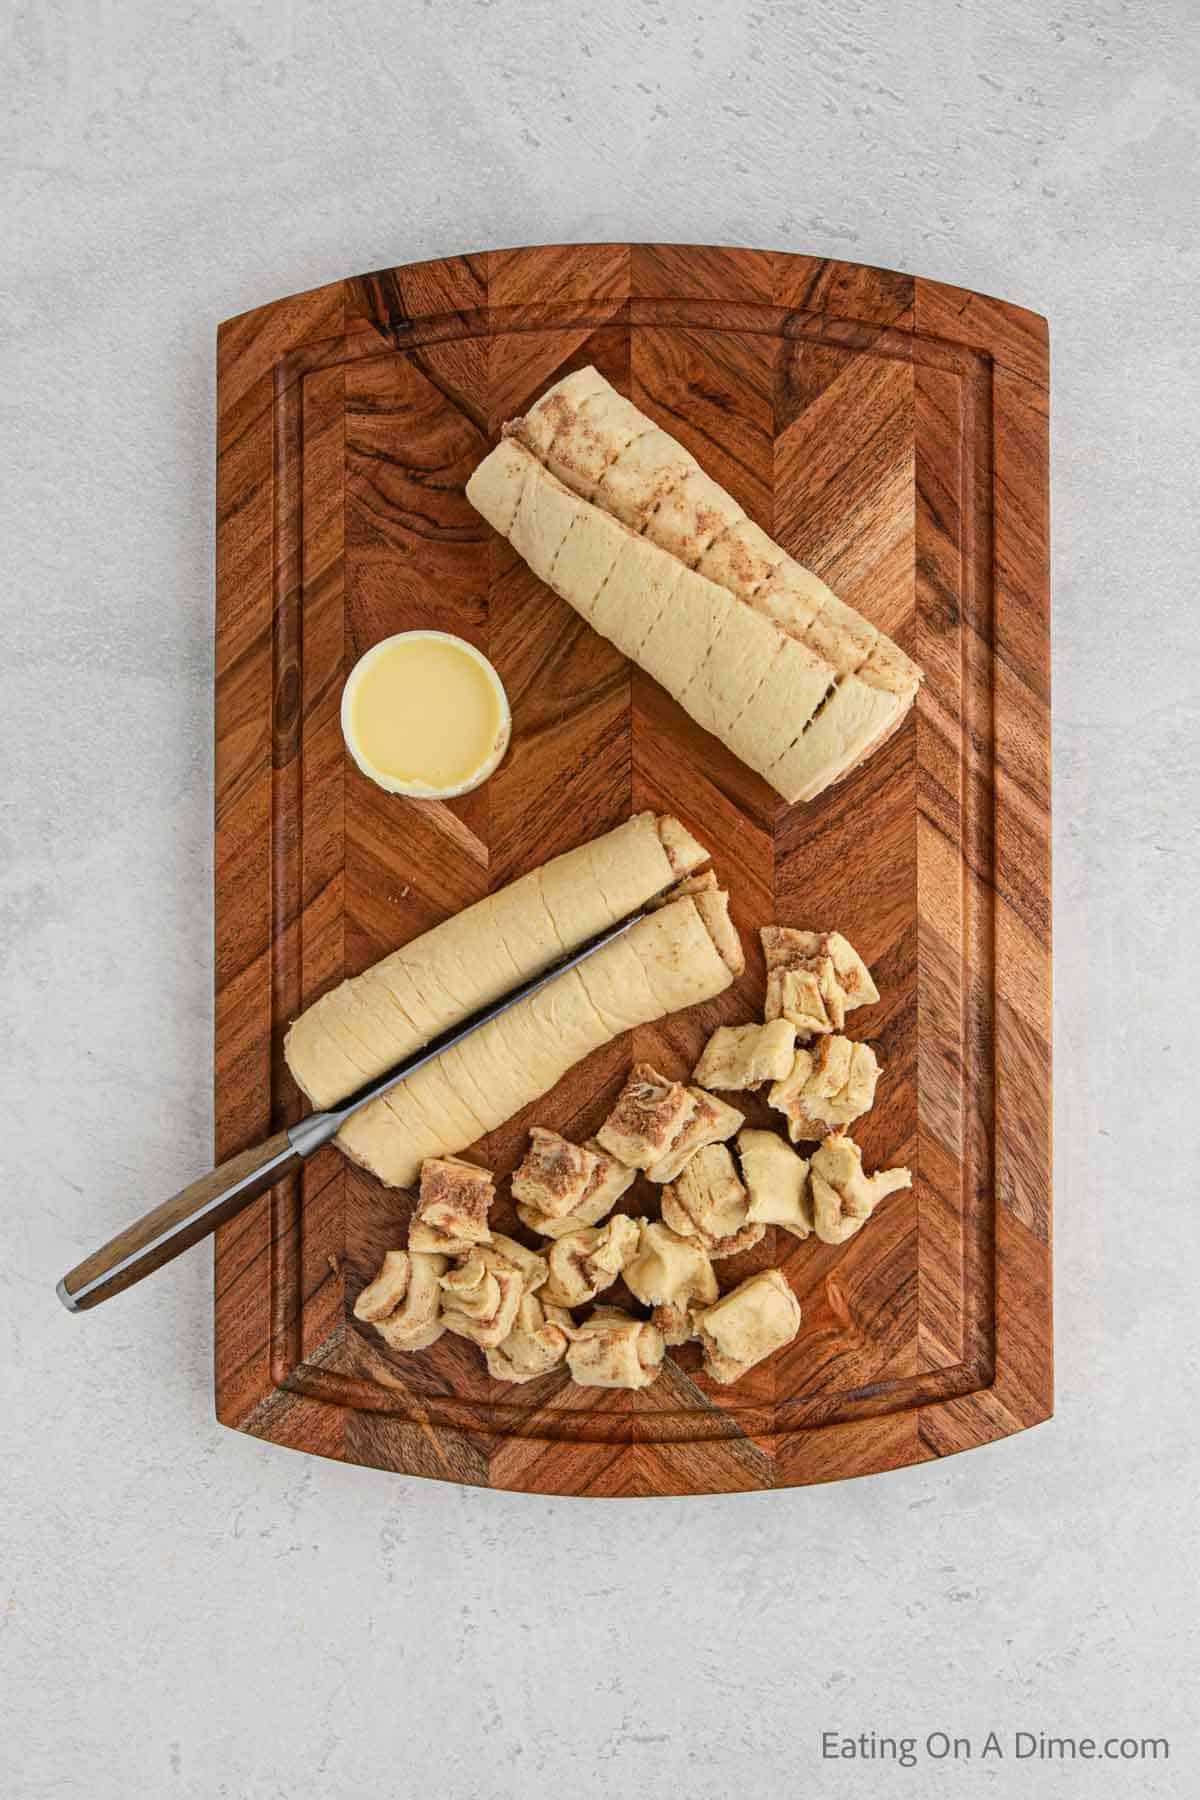 Cutting the cinnamon roll pieces on a cutting board